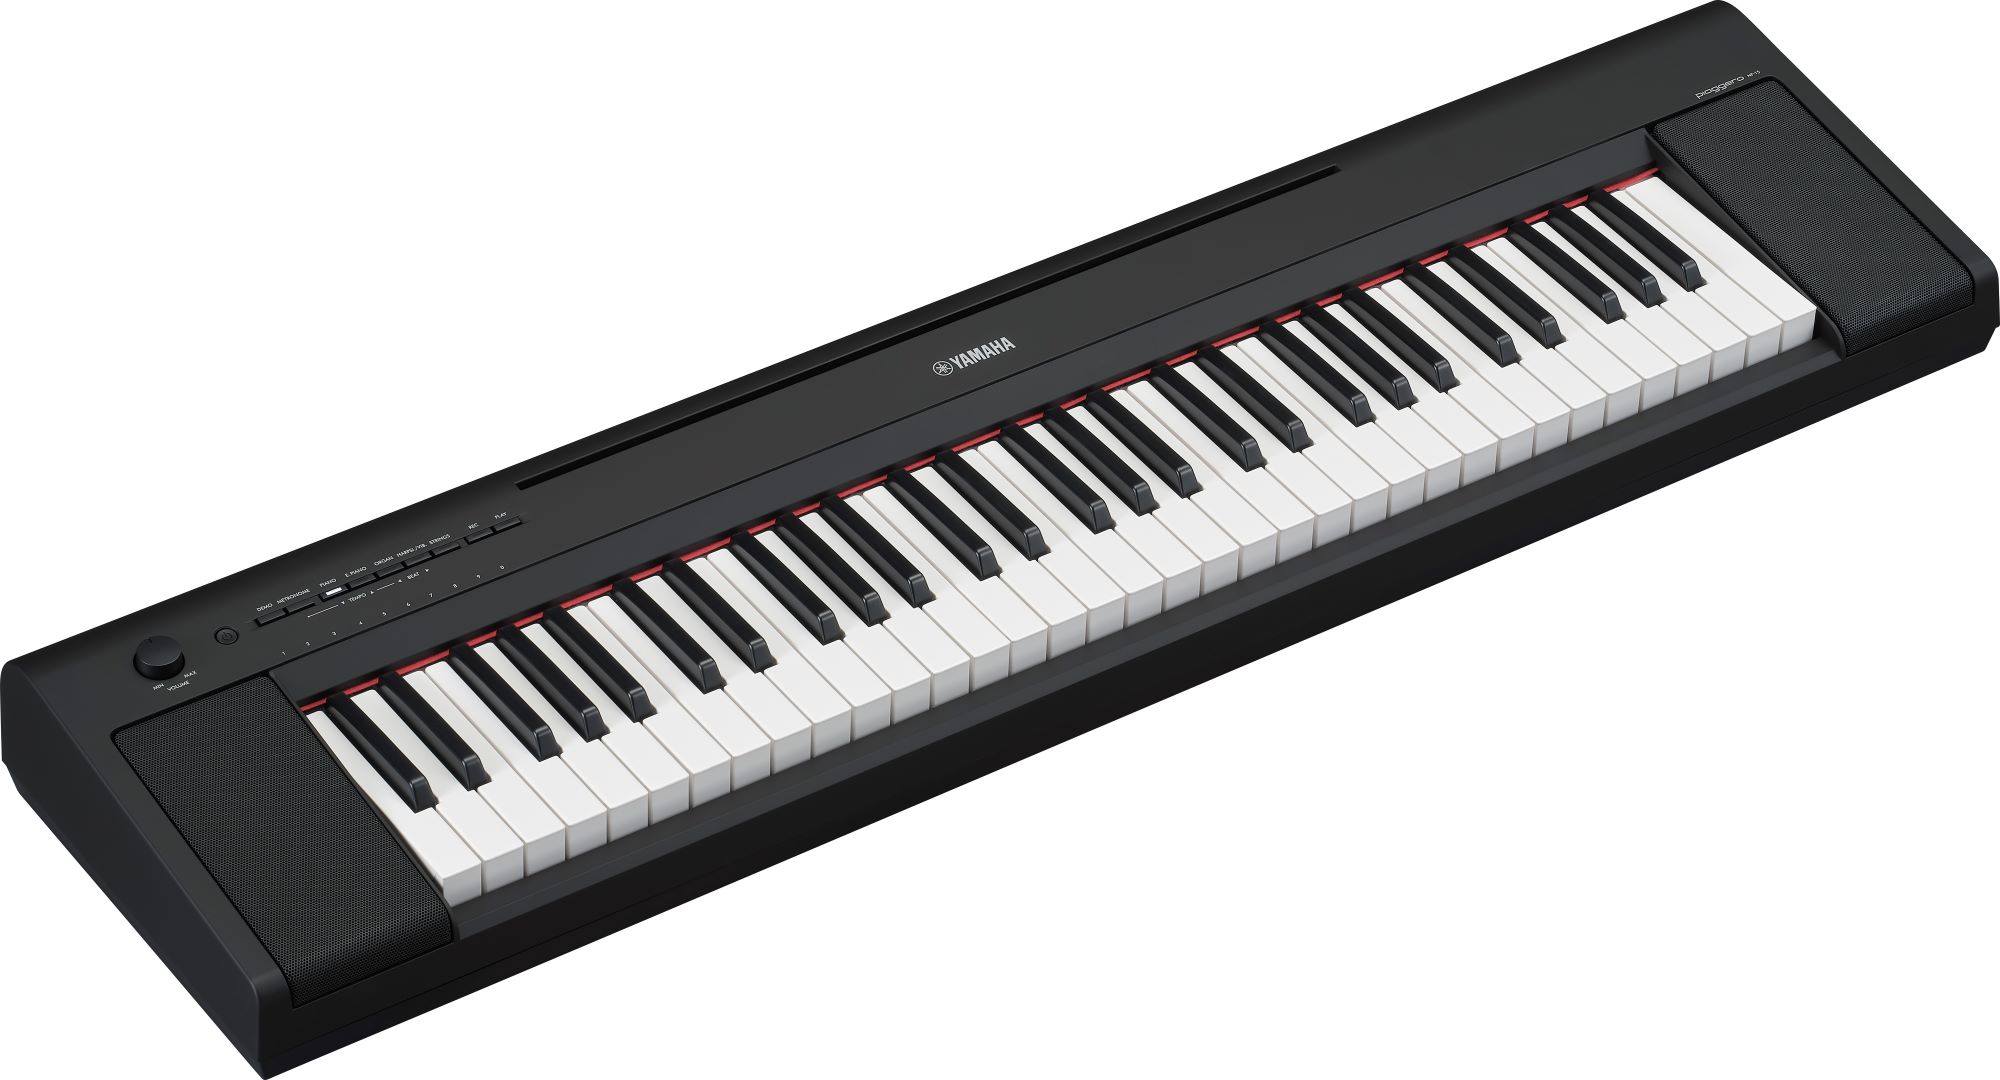 NP-15 Piaggero 61-Key Slimline Home Keyboard In Black